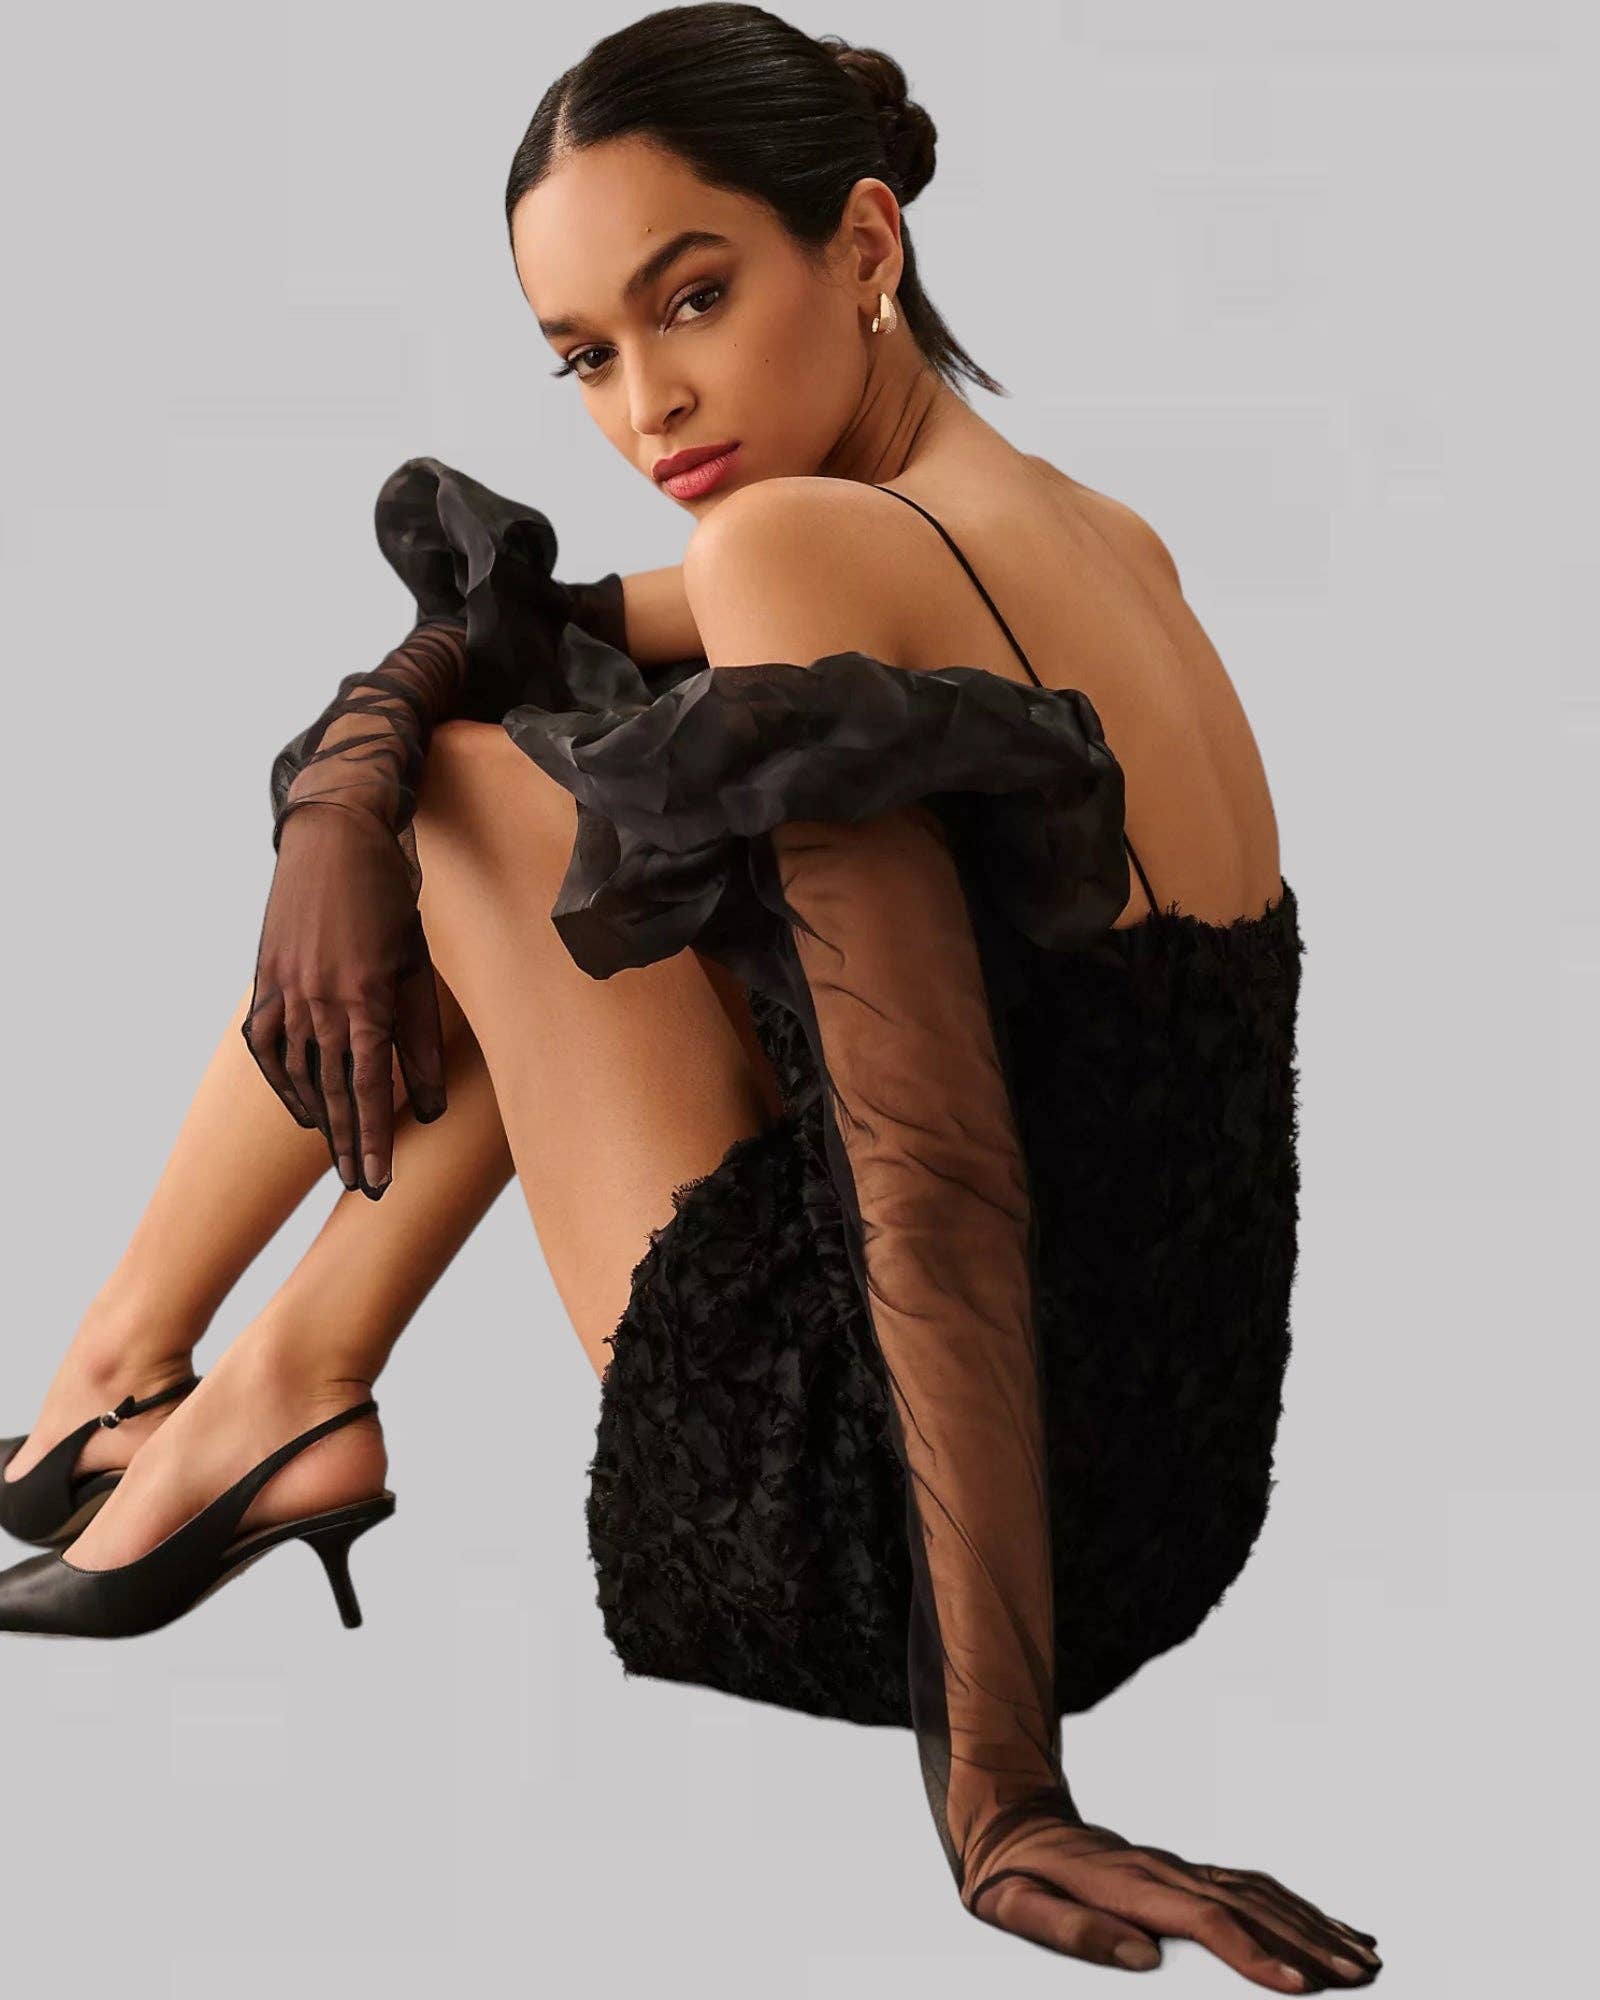 Celebrity Legs and Feet in Tights: Lauren Conrad`s Legs and Feet in Tights  10